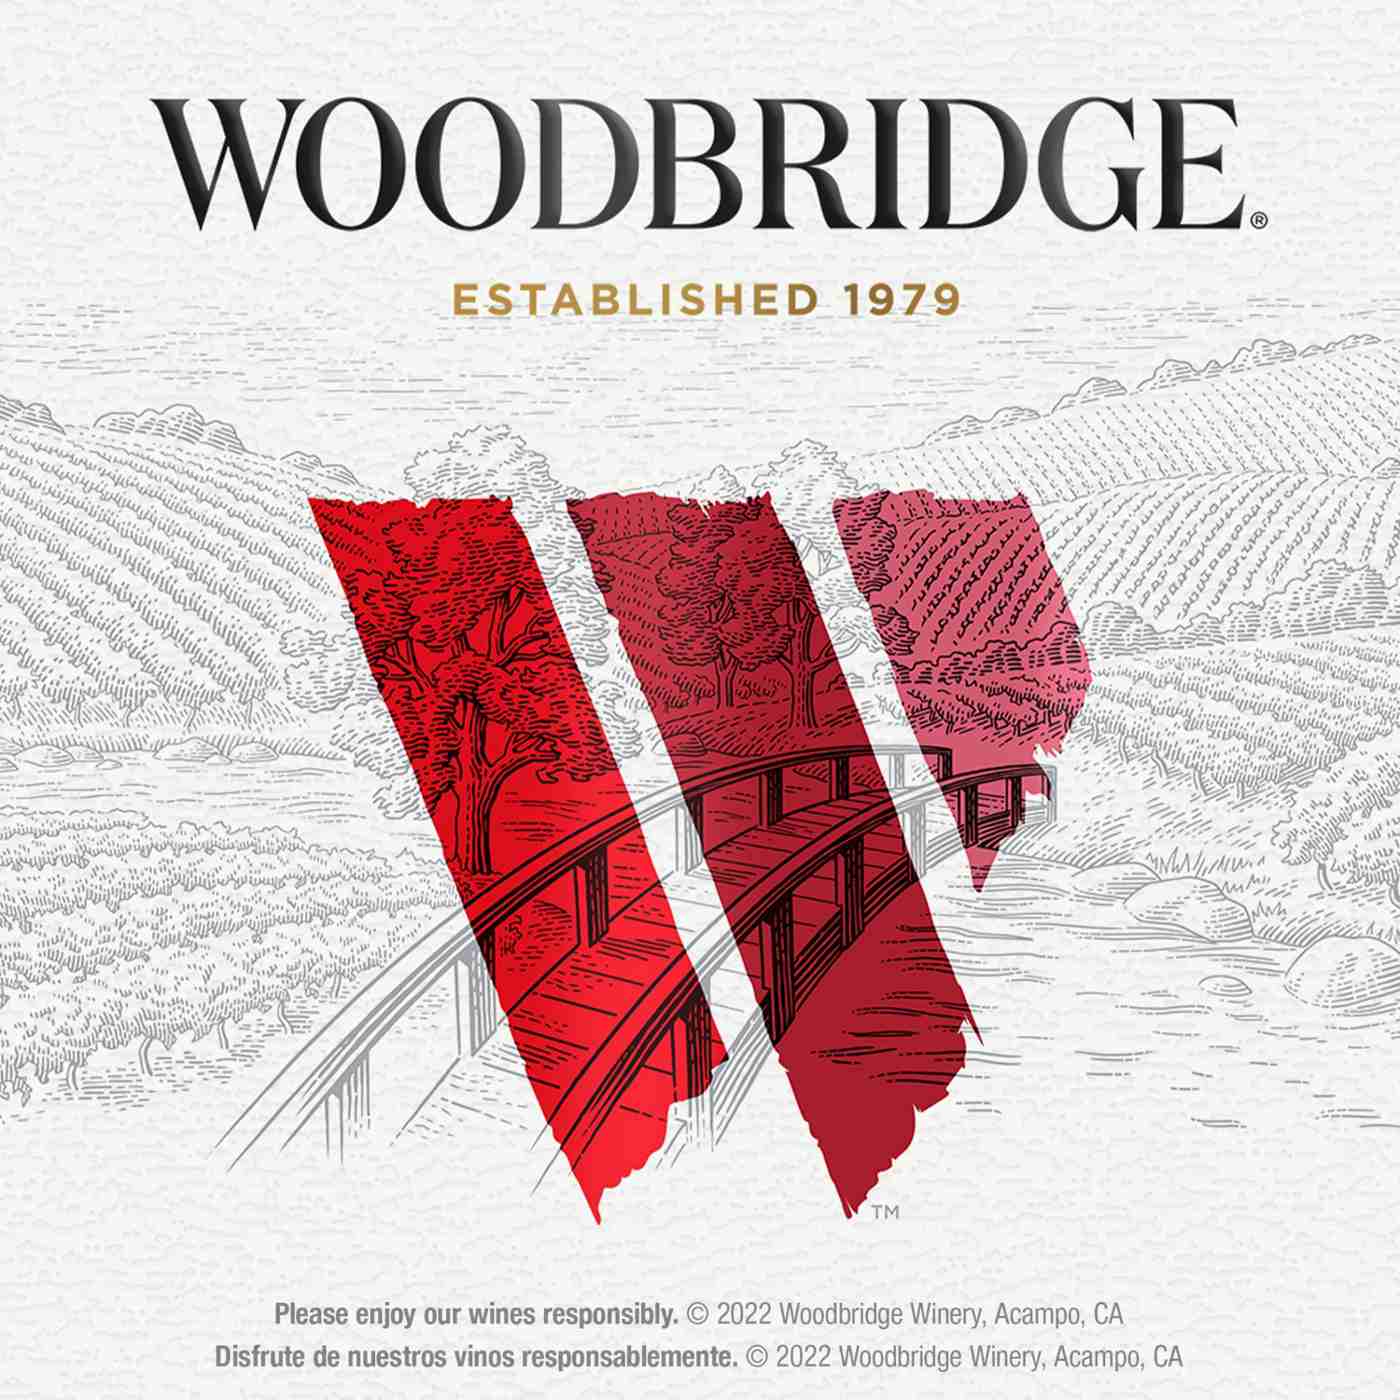 Woodbridge Cabernet Sauvignon Red Wine 187 mL Cans, 4 pk; image 8 of 11